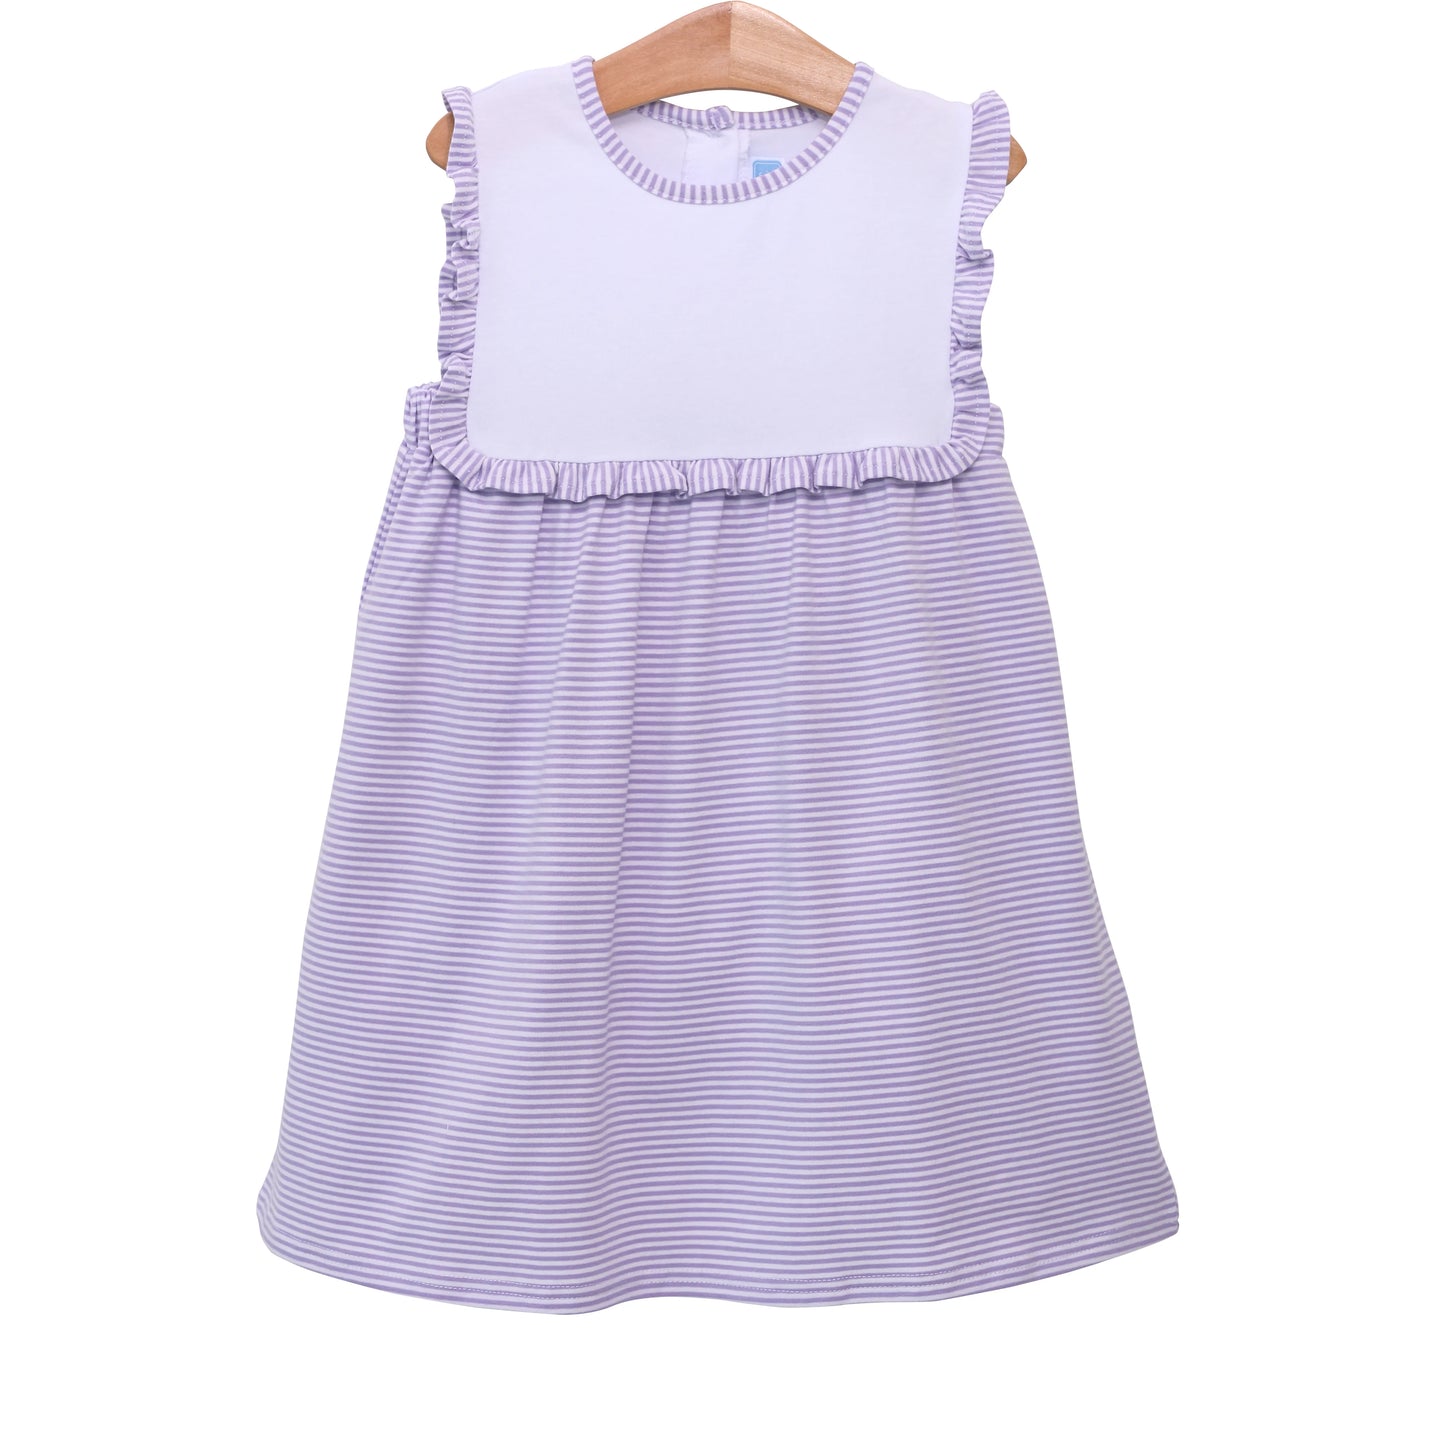 Trotter Street Kids Alice Dress - Lavender Stripe